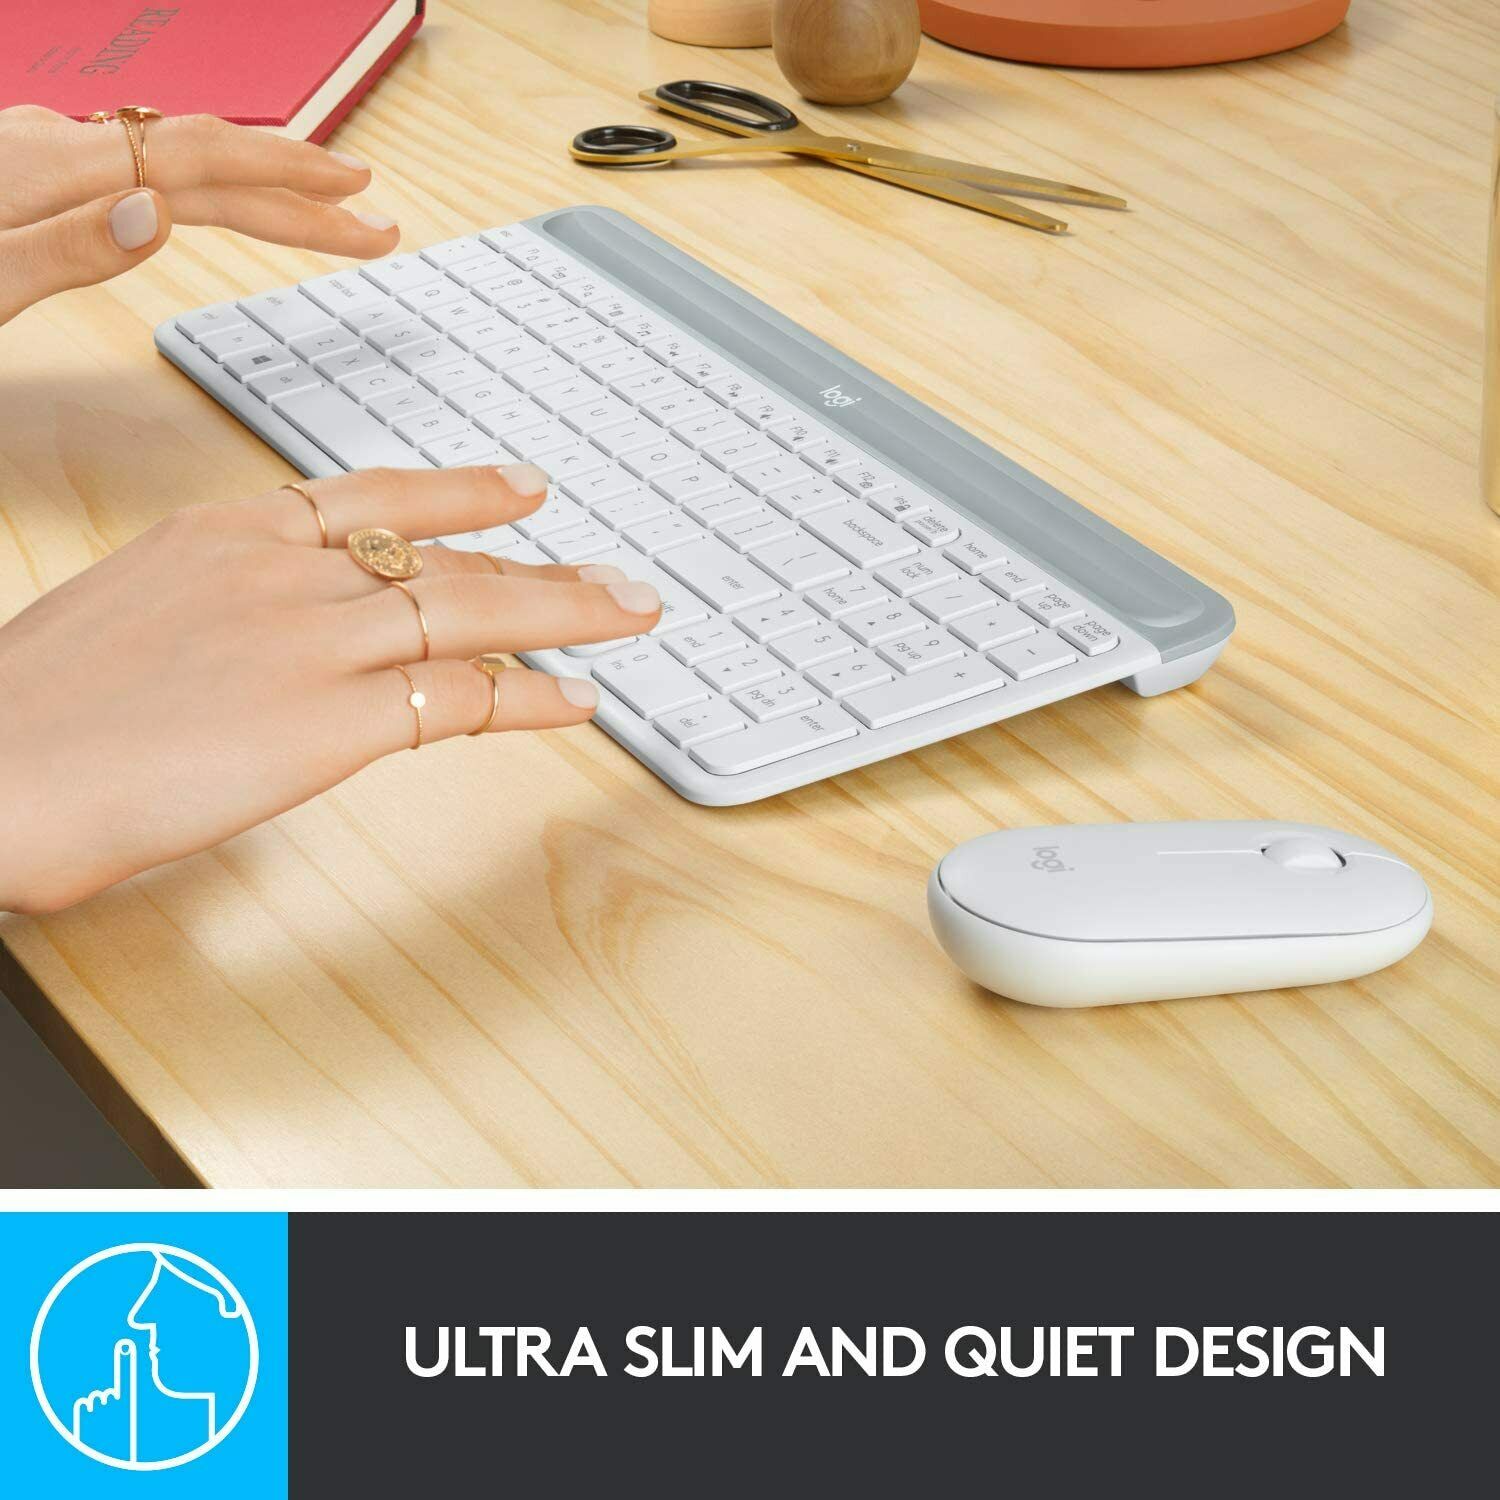 Logitech MK470 Slim Compact Ultra Quiet 2.4 GHz Wireless Keyboard & Mouse Combo